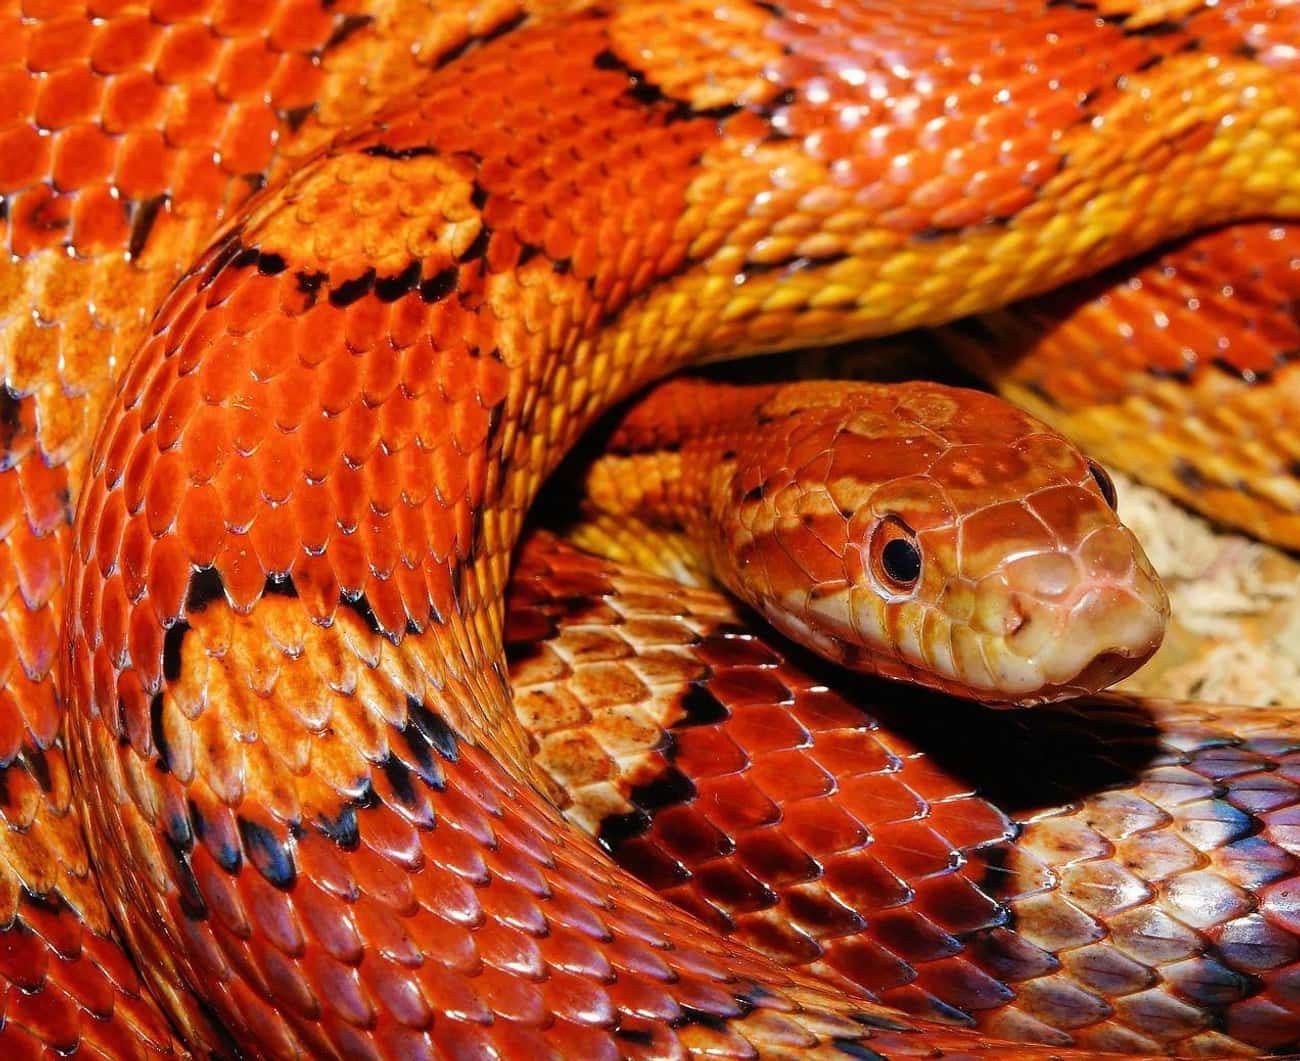 Orange: The Corn Snake